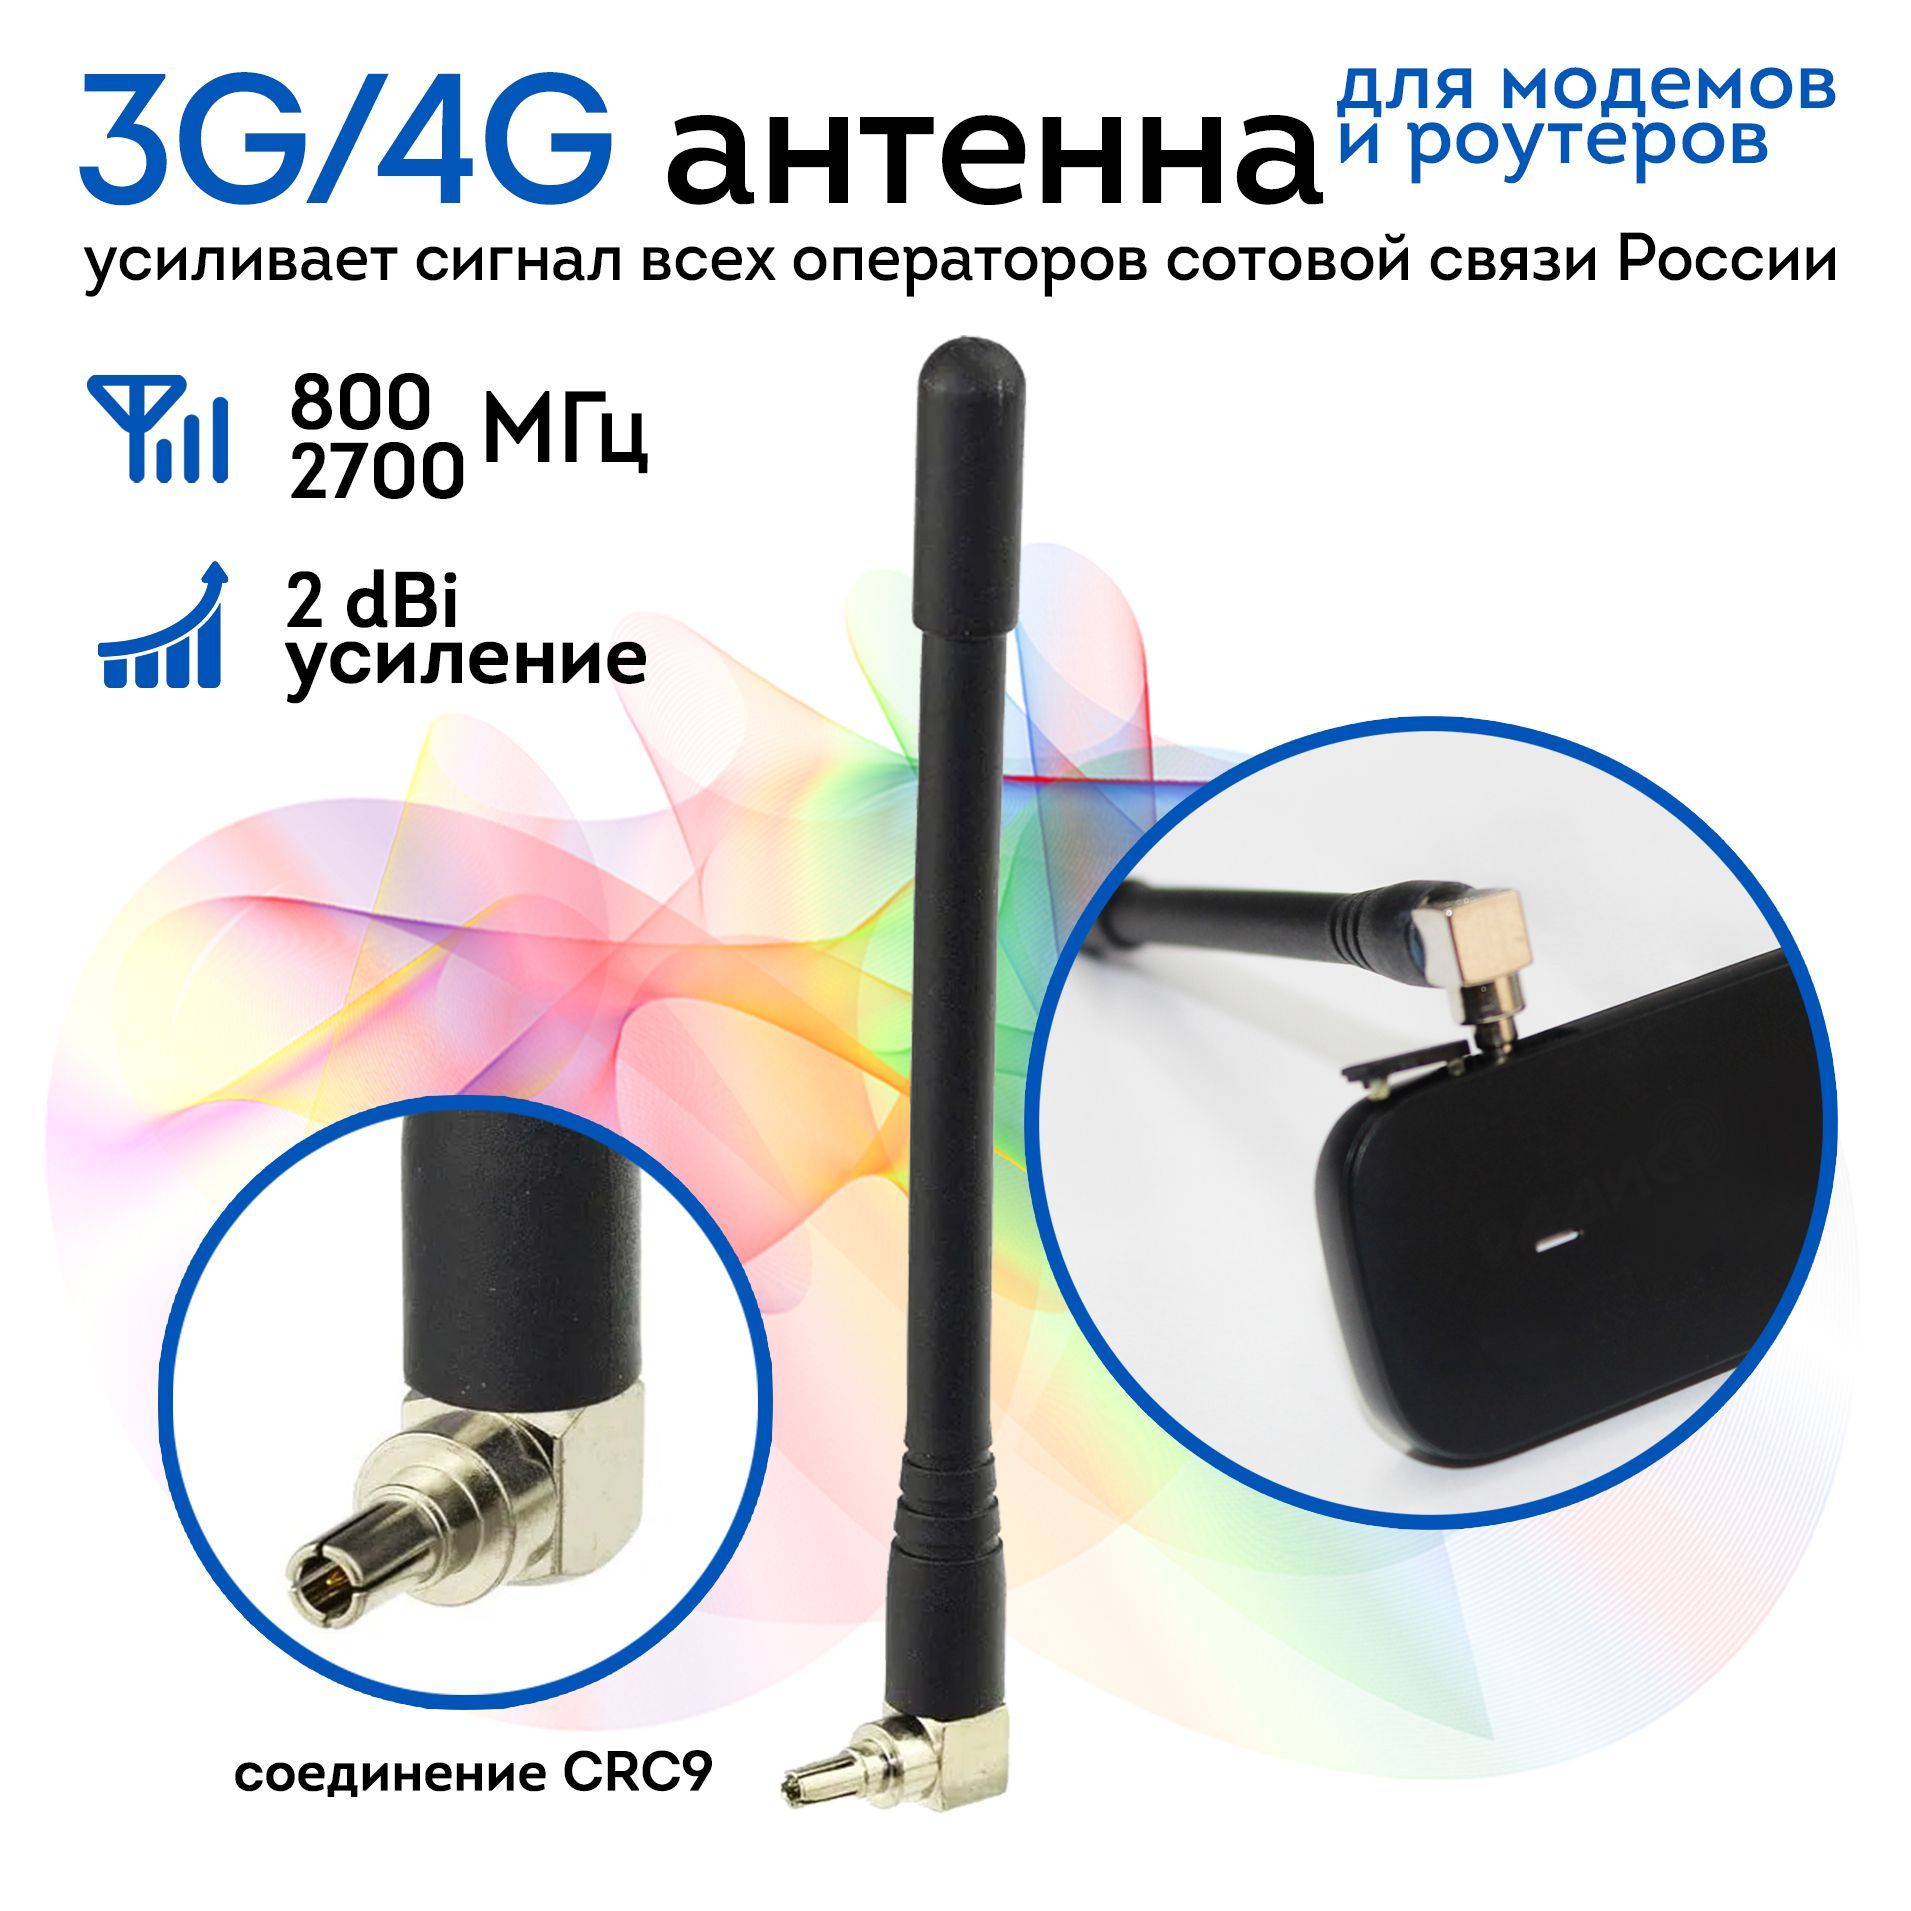 Какую антенну купить для USB-модема (3G/4G)?